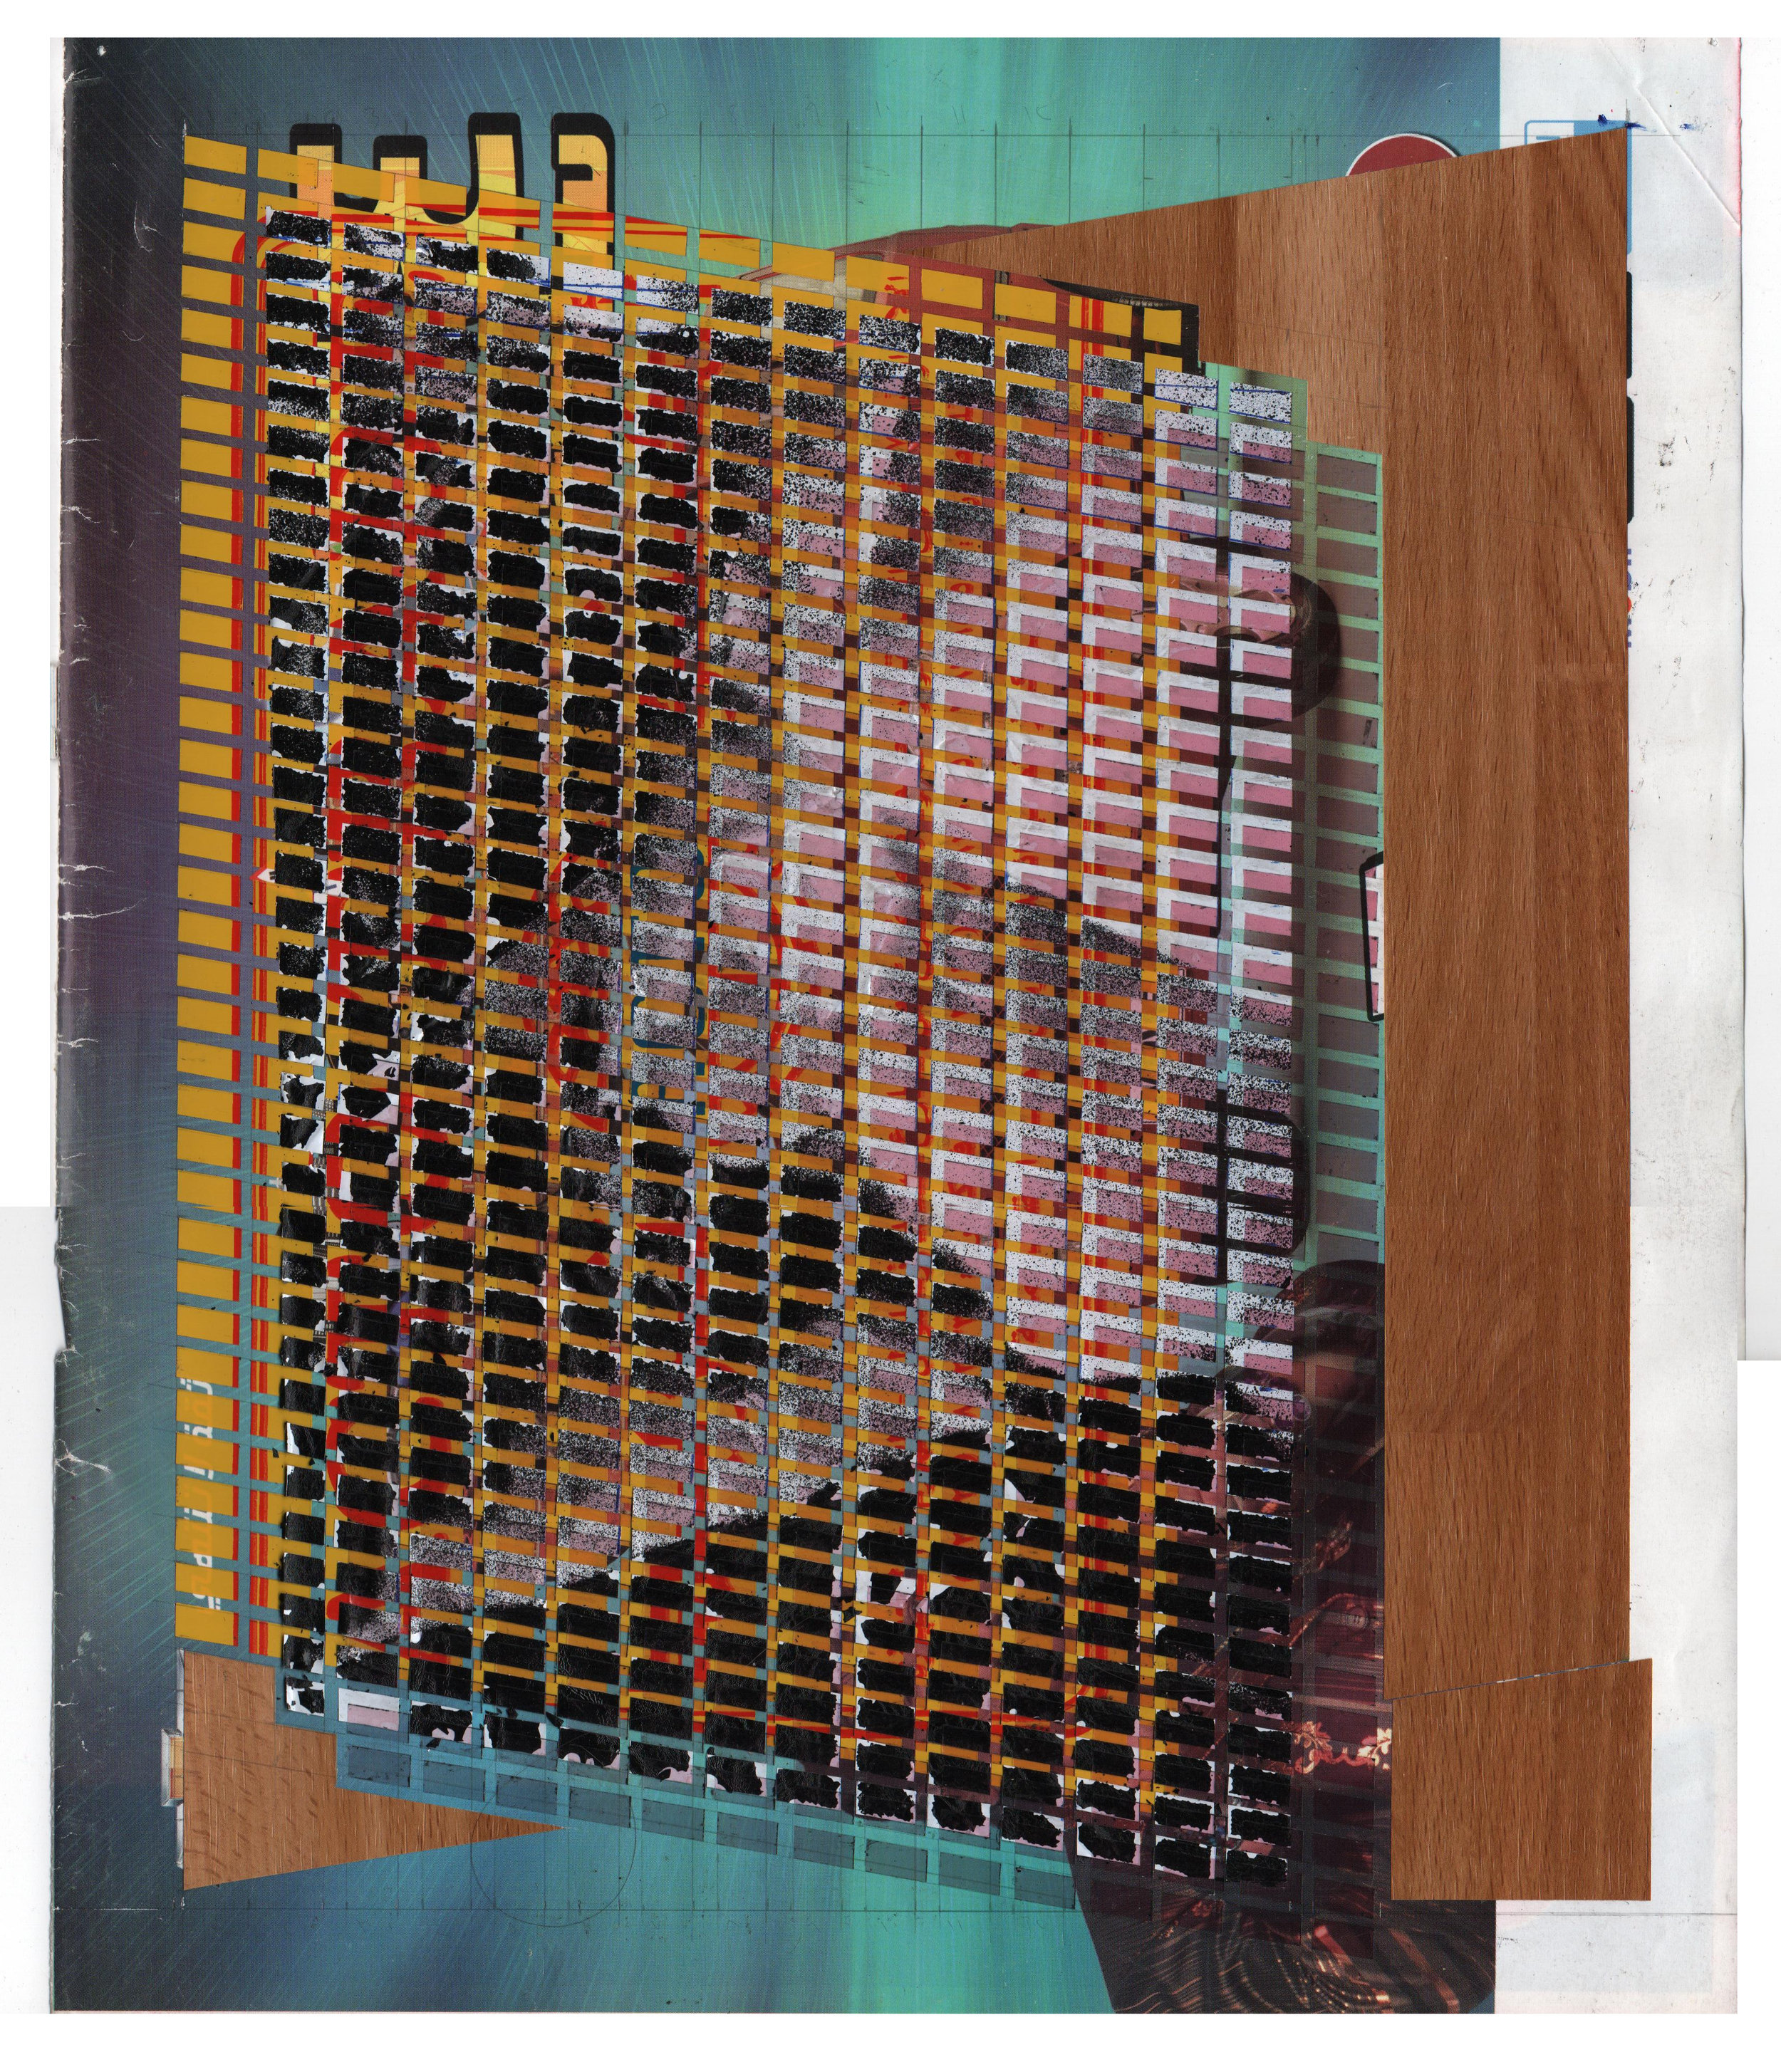  24 Hours Work, El Joker, 2018, magazine page, company sticker, self-adhesive film, spray paint, 32.8 x 27.5 cm.   